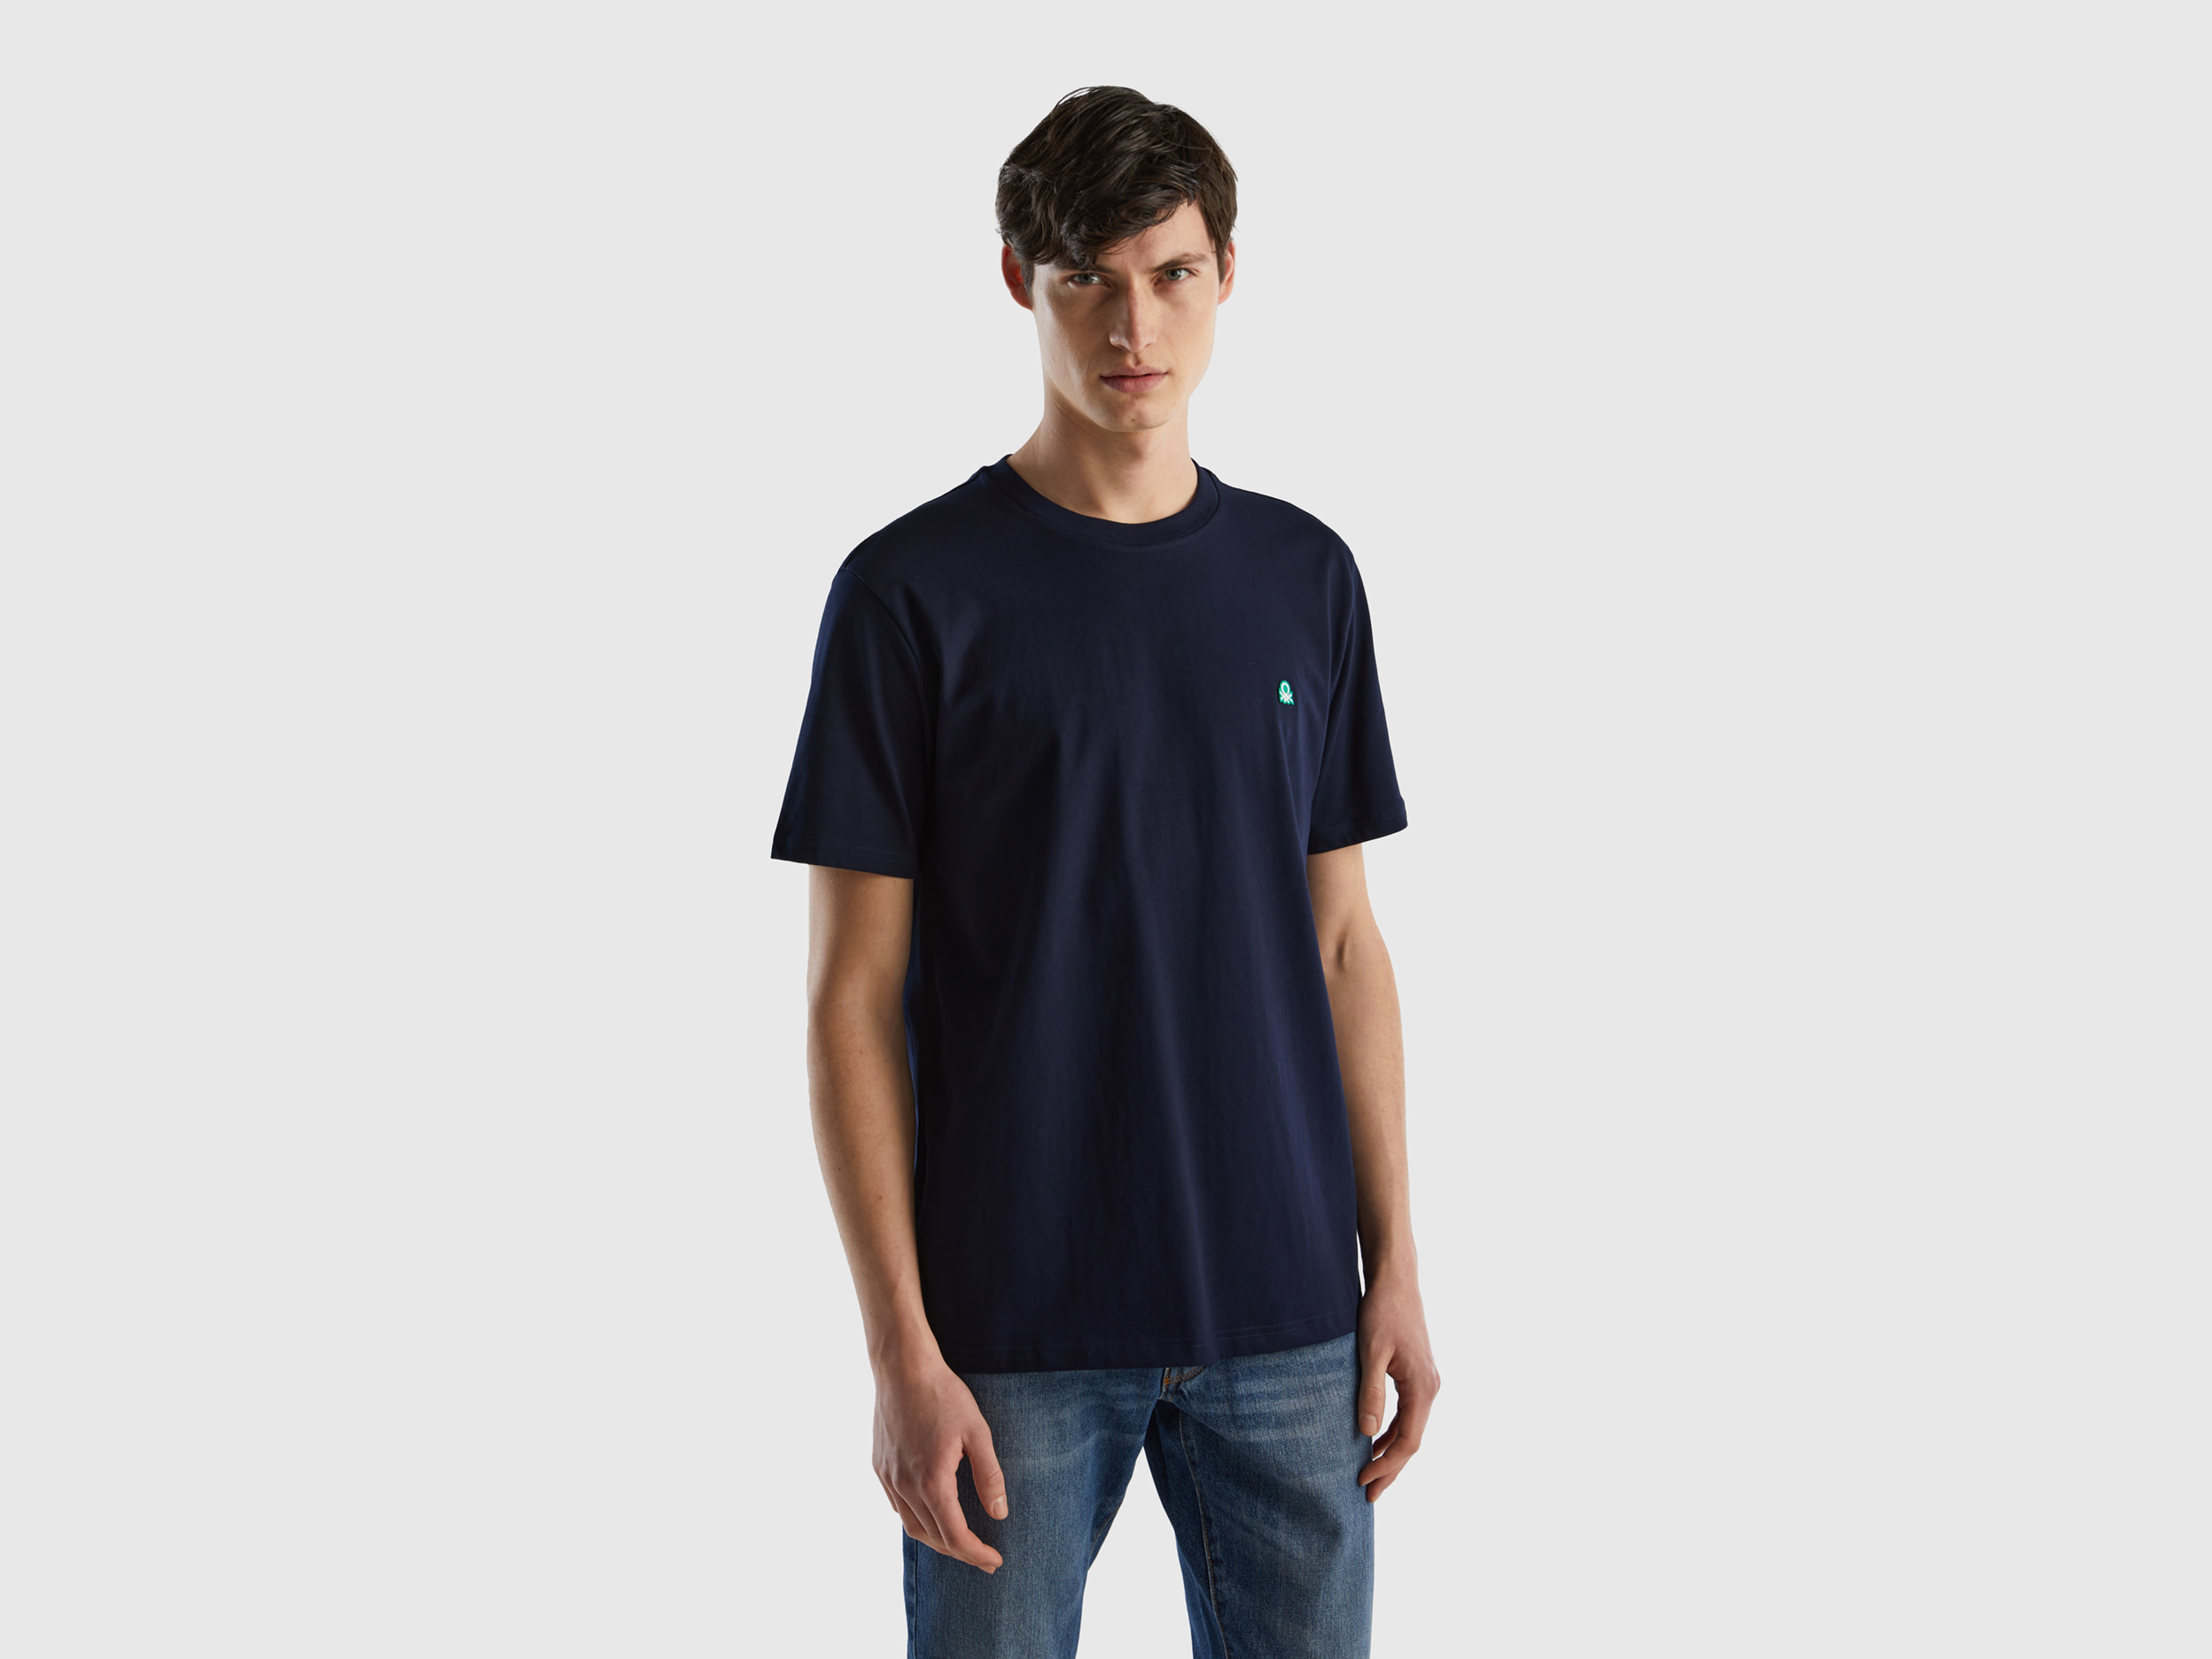 Benetton, 100% Organic Cotton Basic T-shirt, size L, Dark Blue, Men